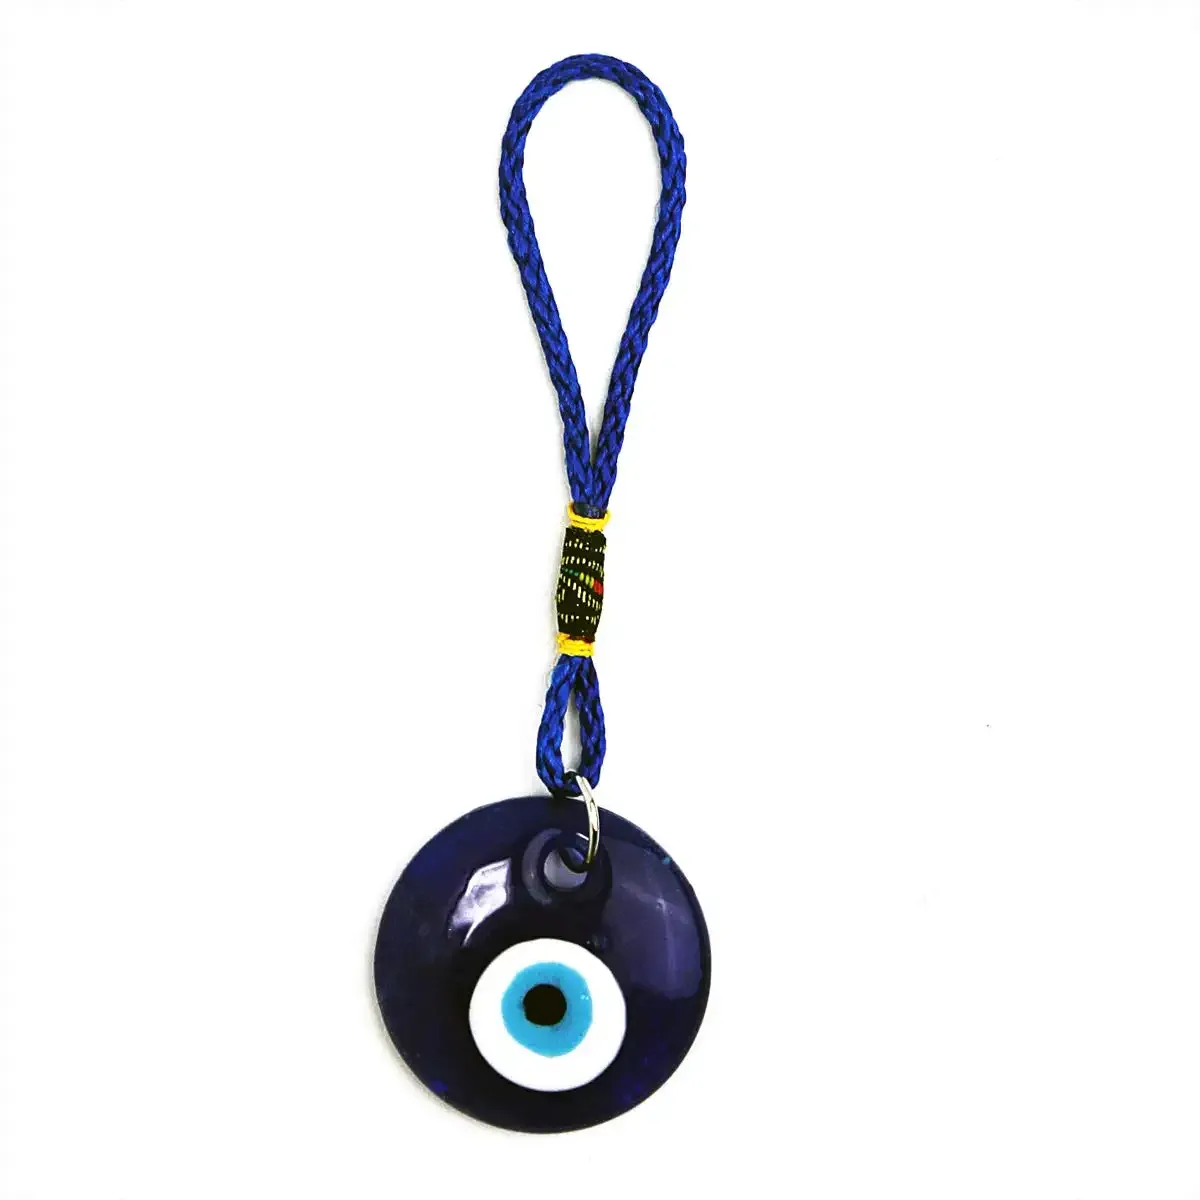 3ml blue evil eye nazar owl key ring blessing protection religious charm birthday blessing congratulatory gift